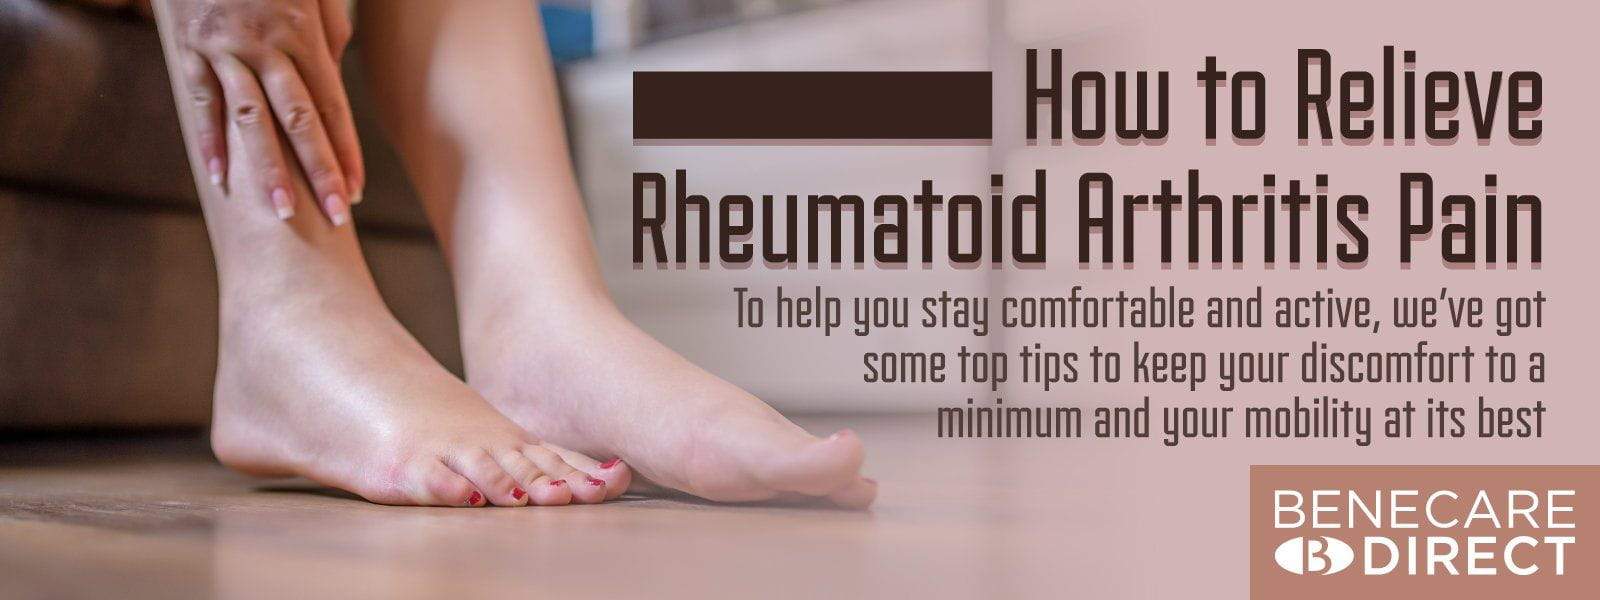 How to Relieve Rheumatoid Arthritis Pain